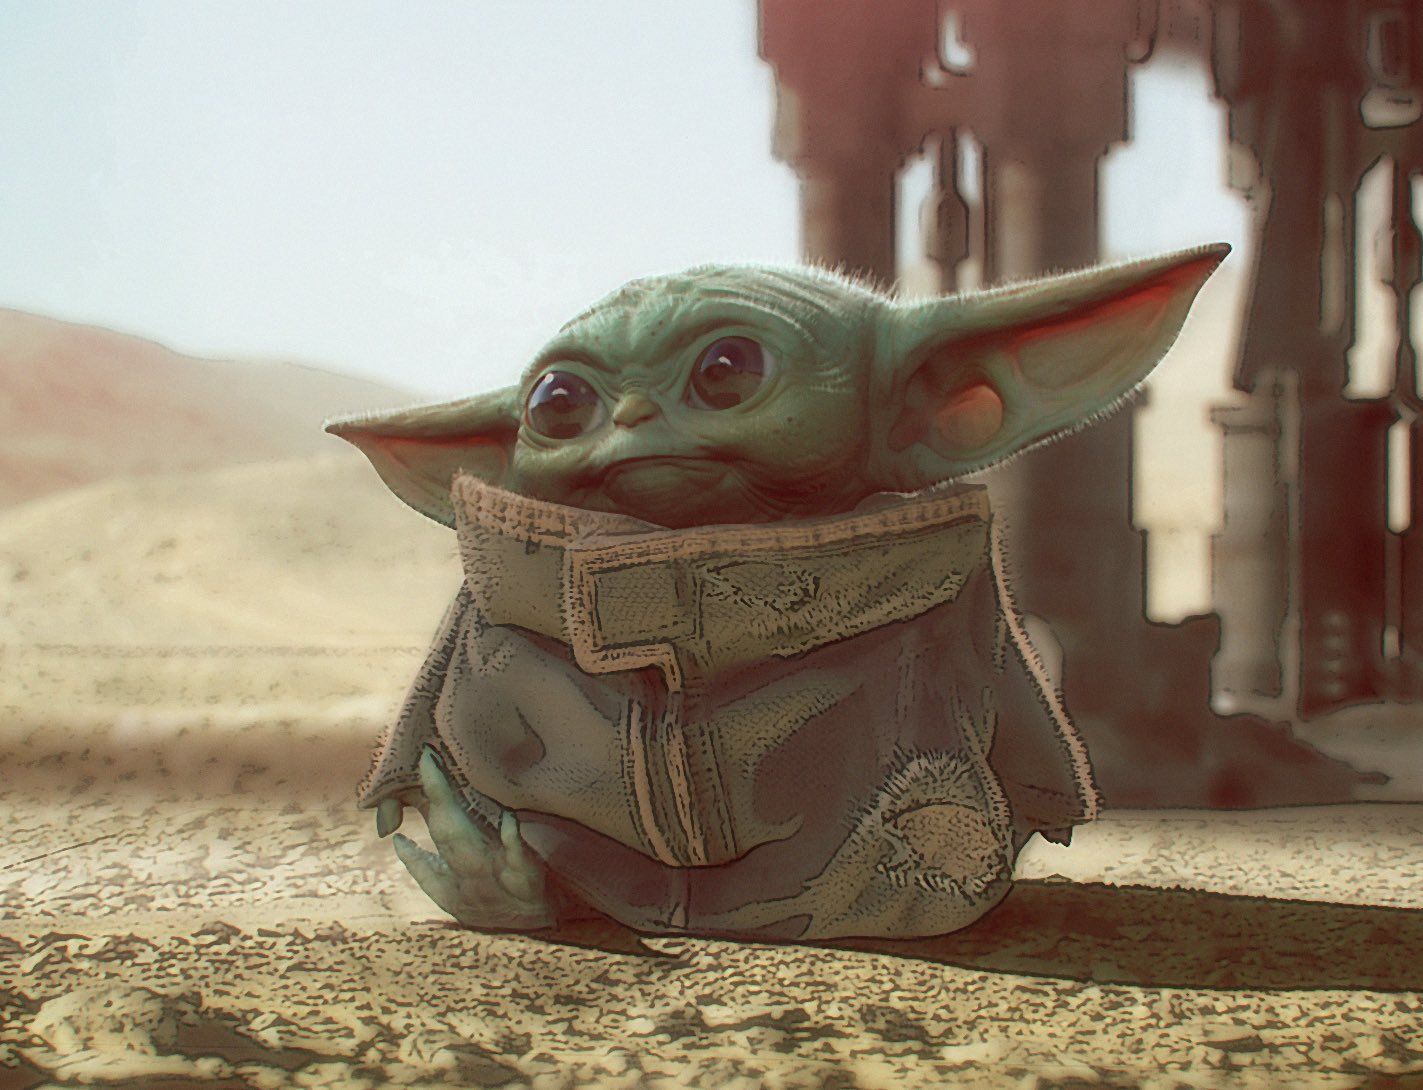 Baby Yoda in a desert, from the Mandalorian series. - Baby Yoda